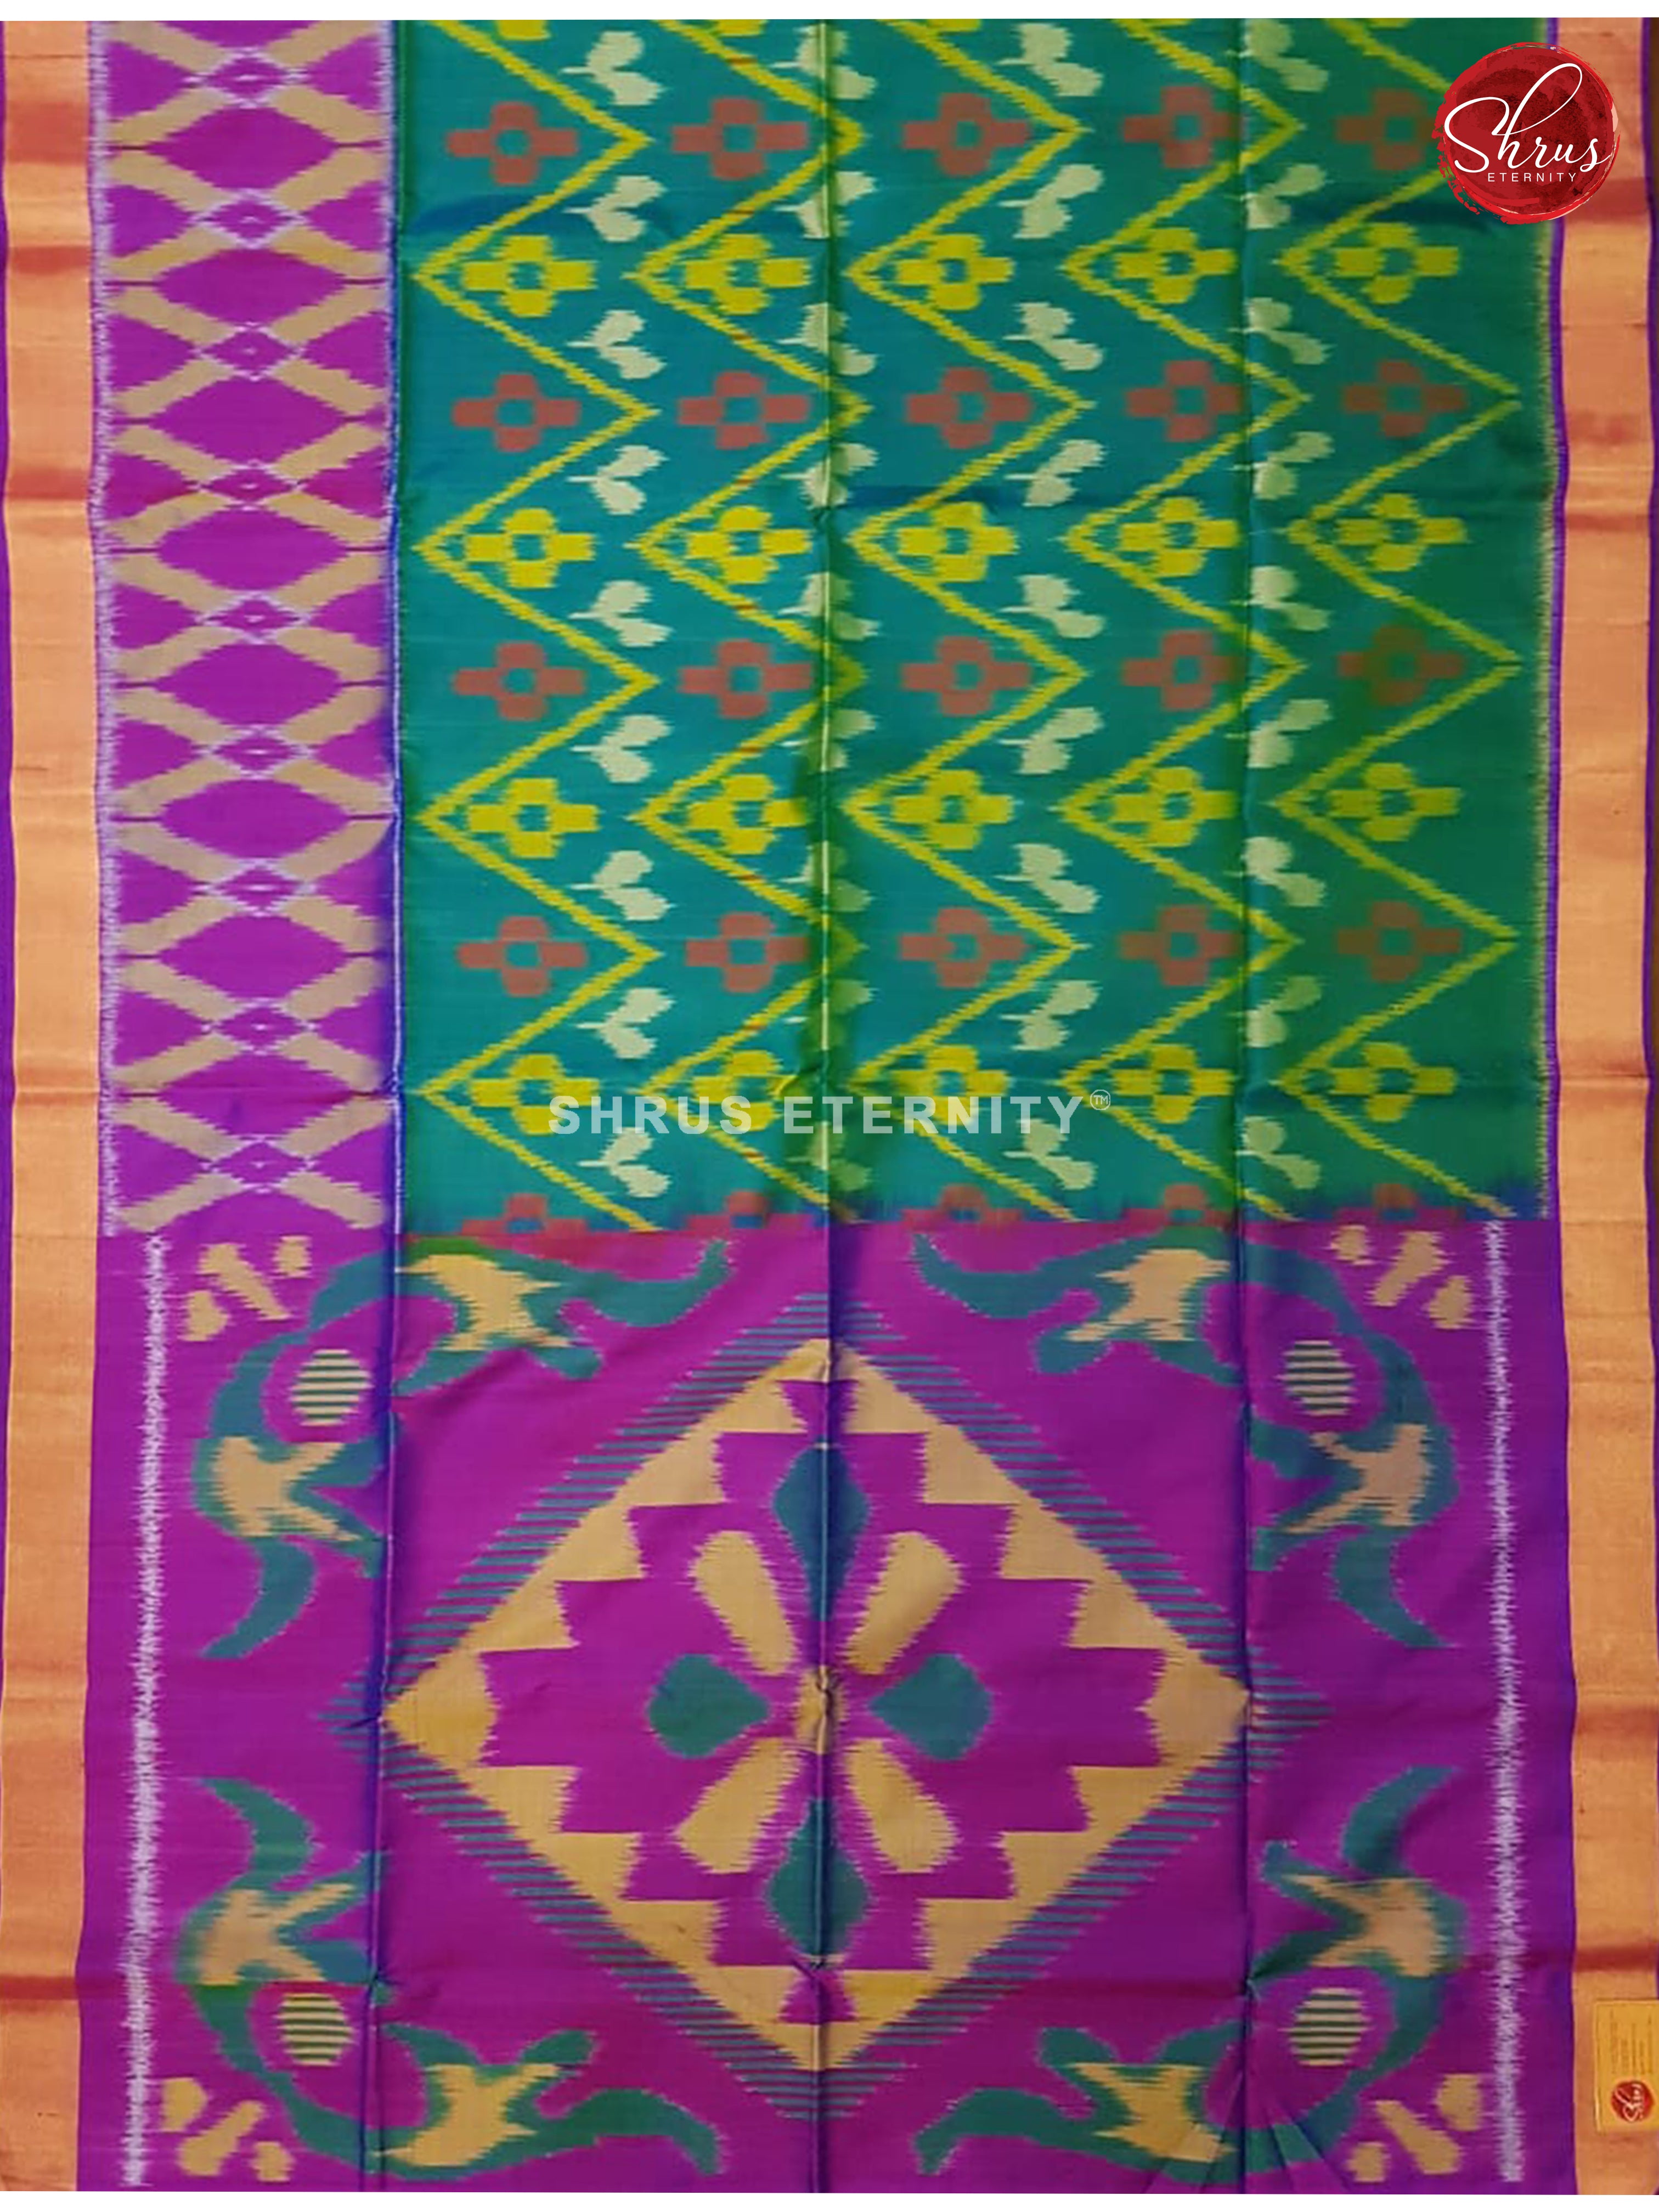 Green & Purple - Soft Silk - Shop on ShrusEternity.com